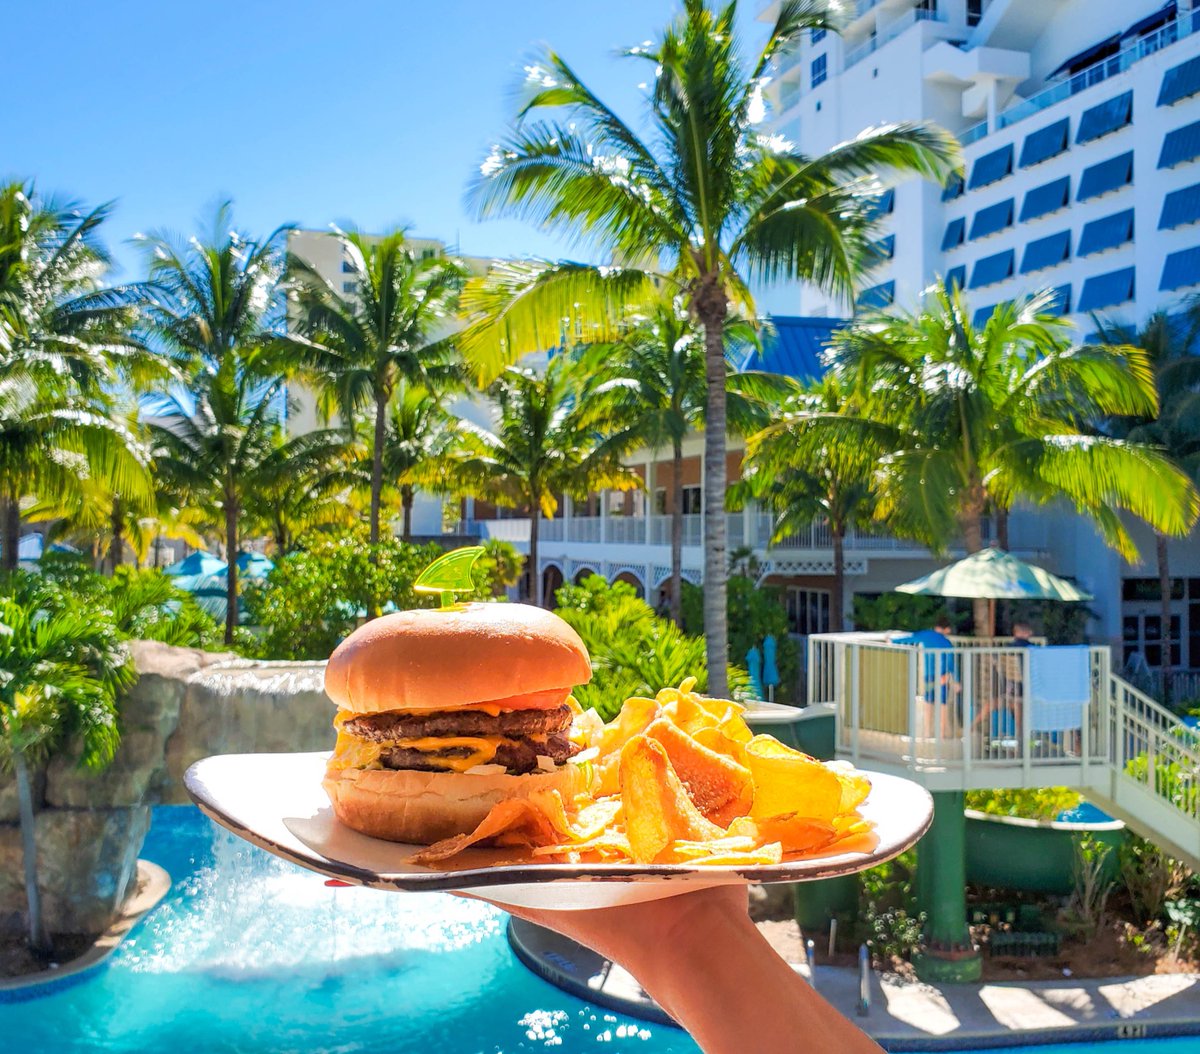 Cheeseburger in Paradise! 🍔 #margaritaville 

#hollywoodfl #cheeseburger #visitflorida